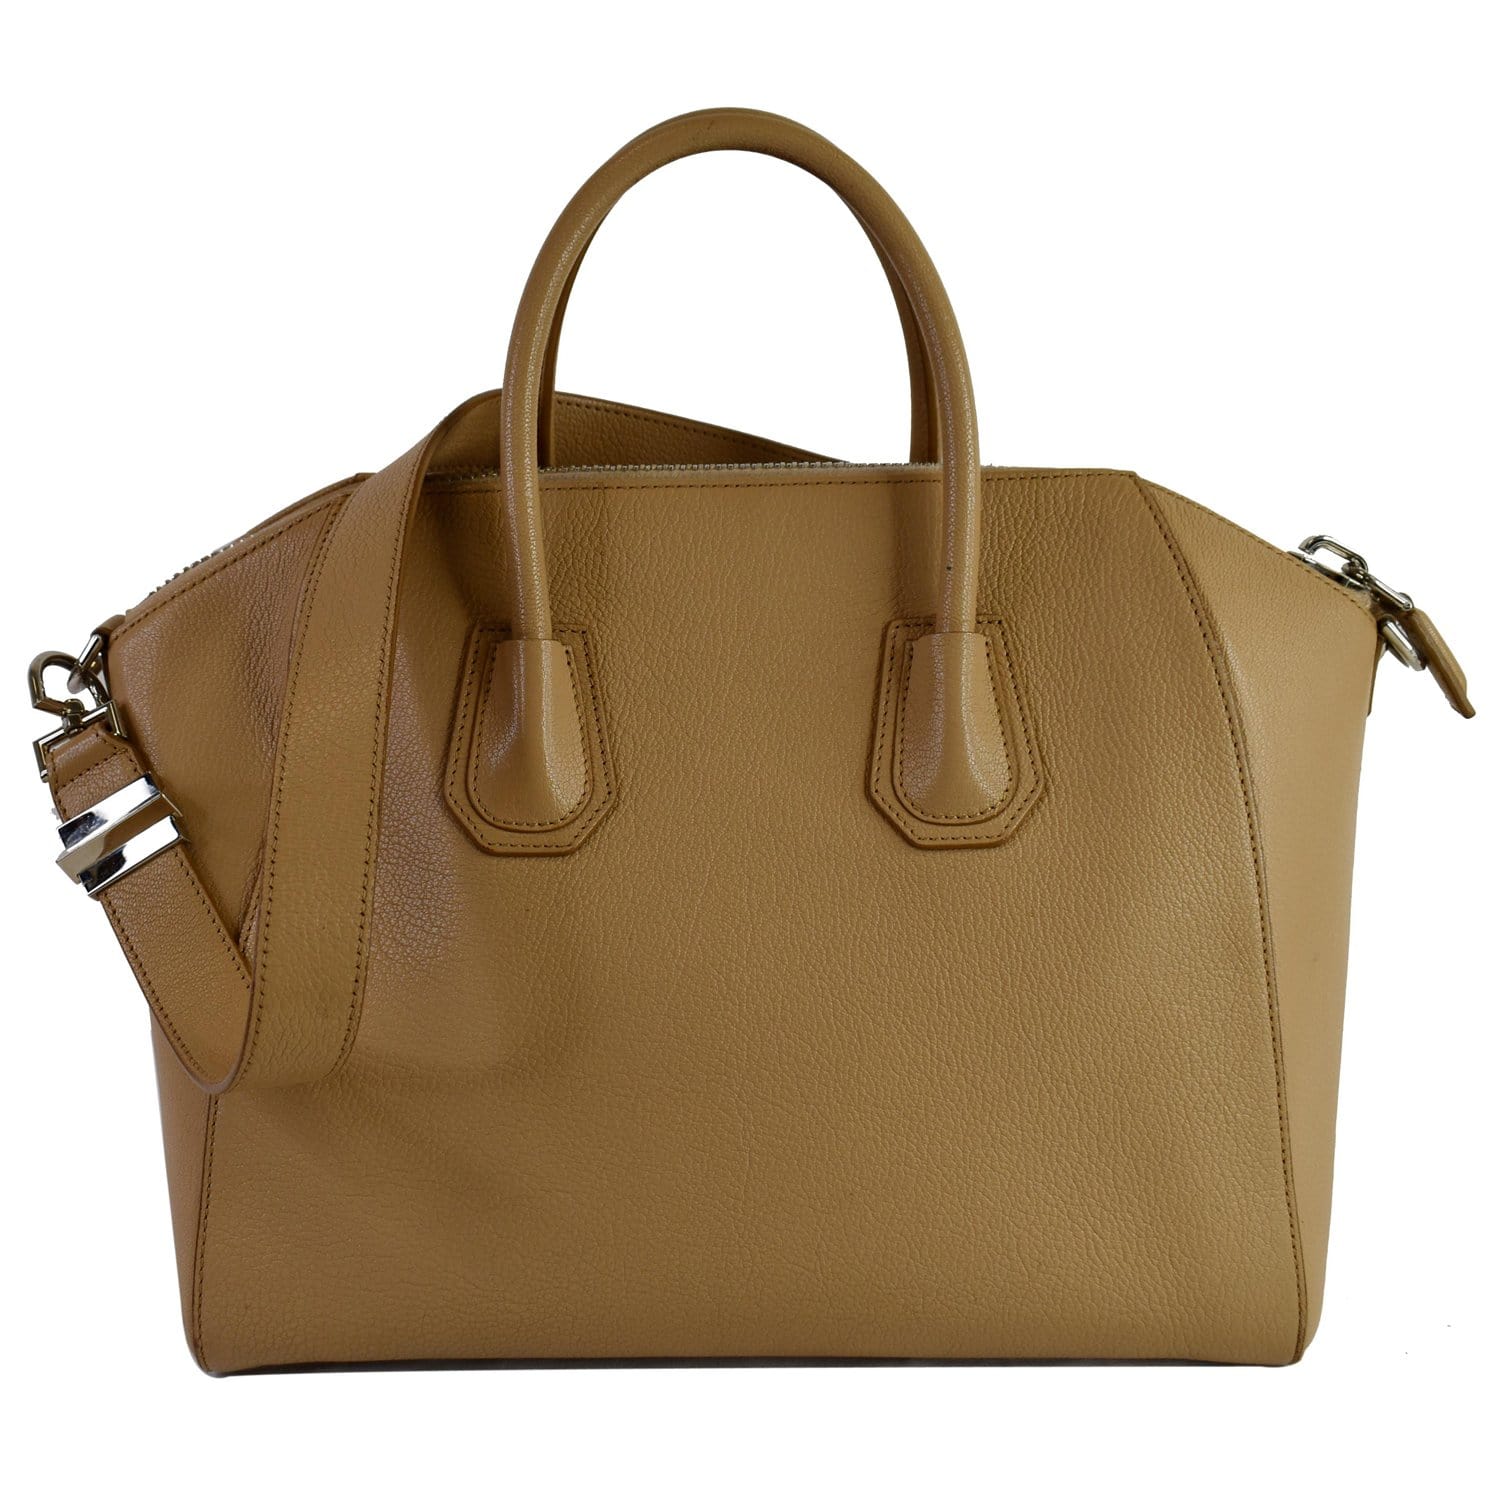 Givenchy Antigona Medium Bag Review + 13 Outfits 💃 WOULD I BUY AGAIN? 🤔 